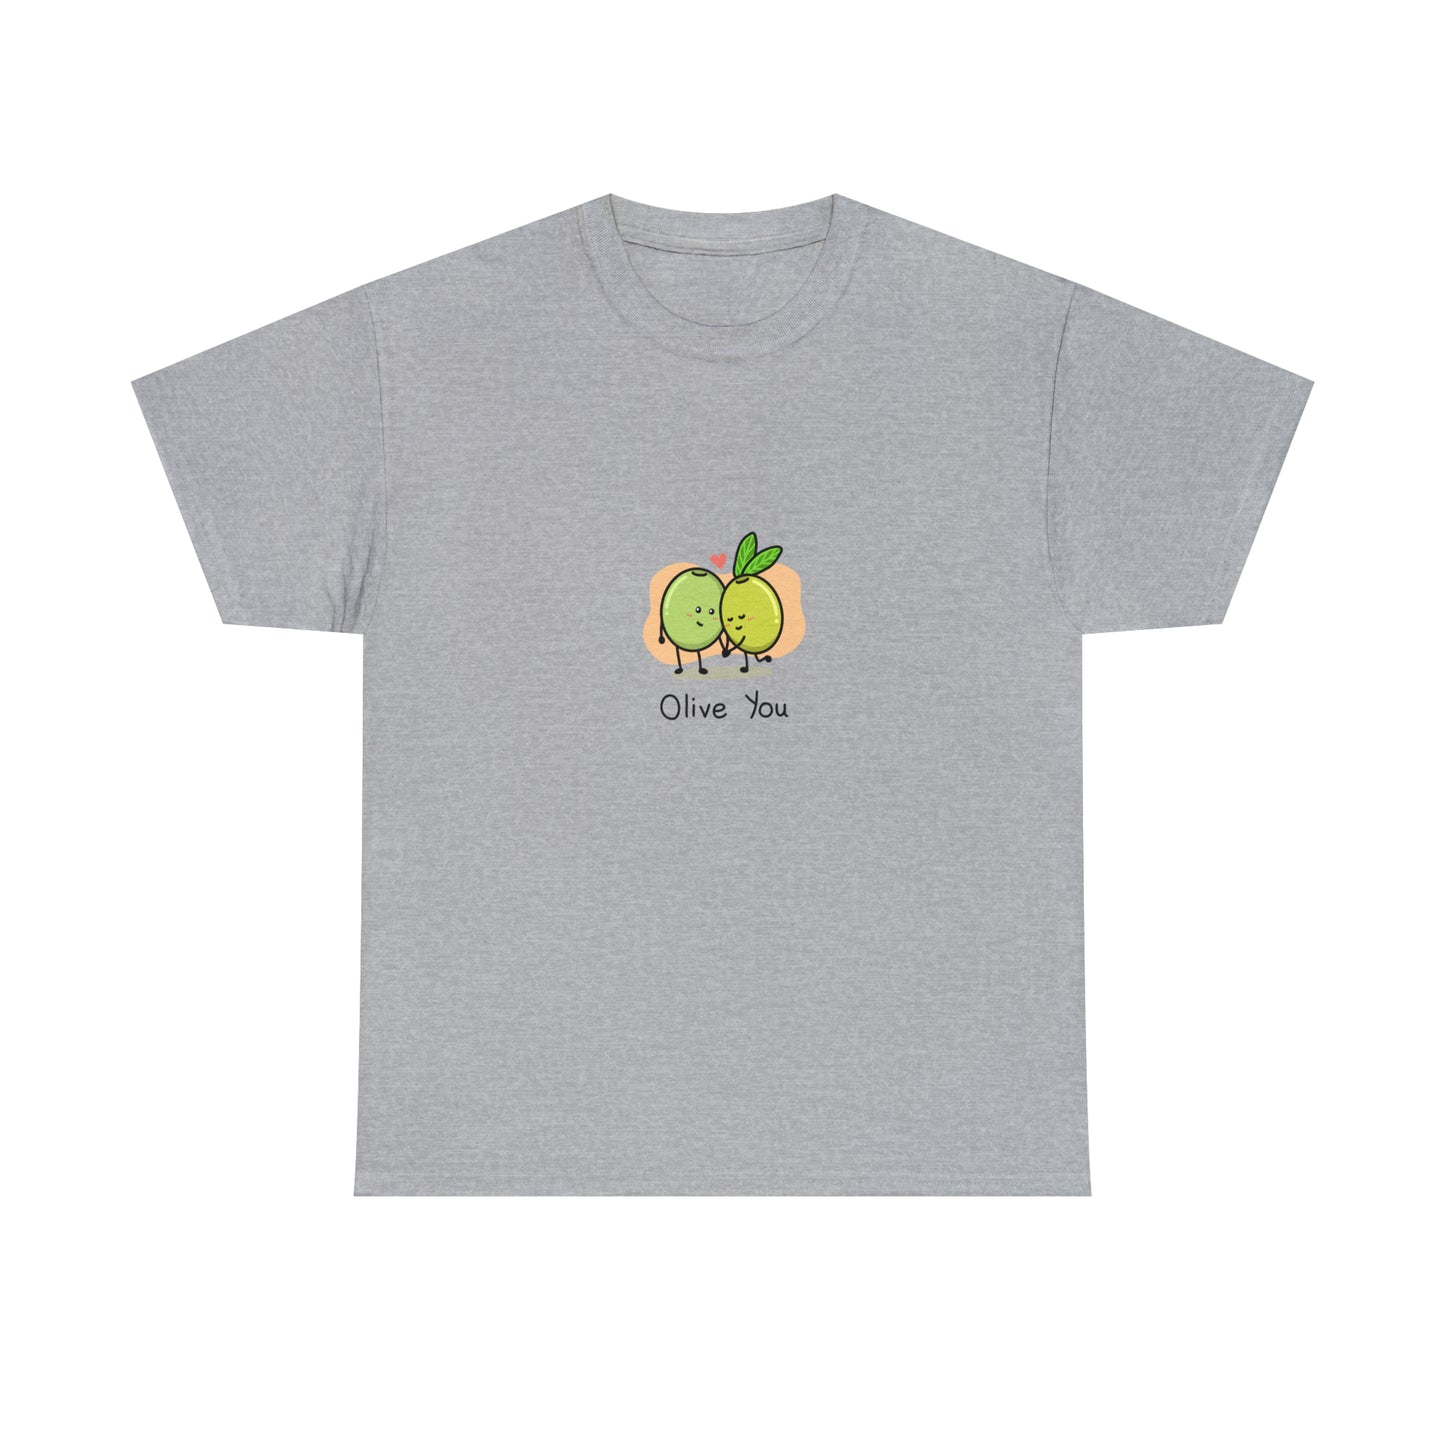 Custom Parody T-shirt, Olive you design